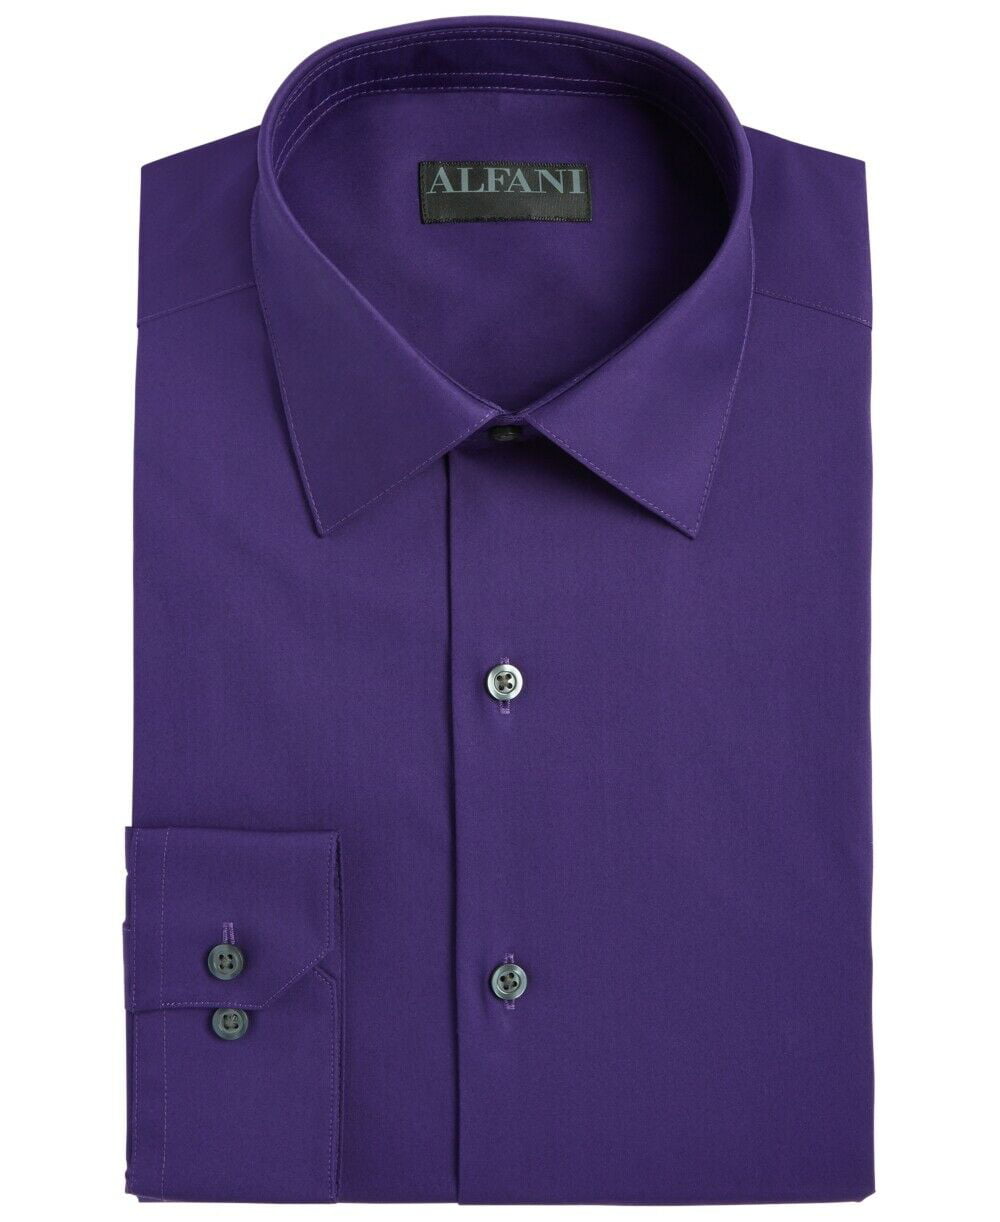 $85 ALFANI Men REGULAR-FIT WHITE PURPLE LONG-SLEEVE DRESS SHIRT 17-17.5 34/35 XL